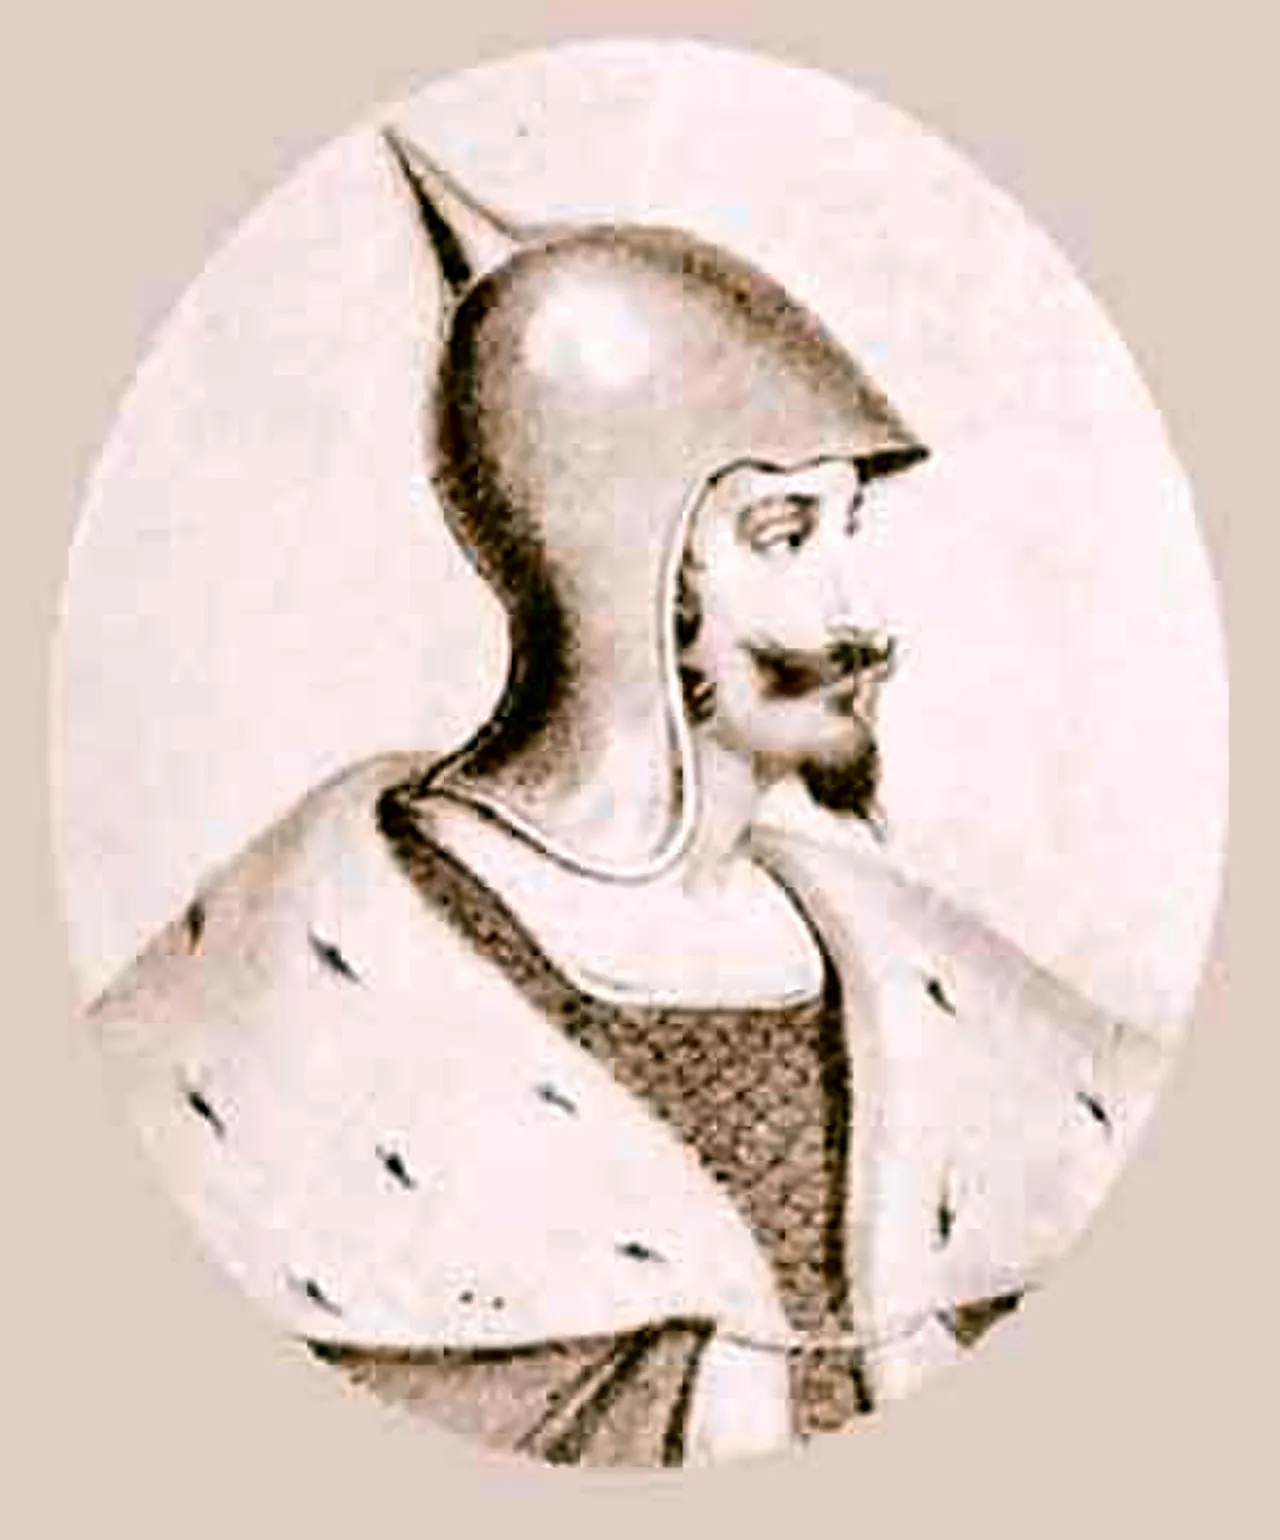 Изяслав II Мстиславич